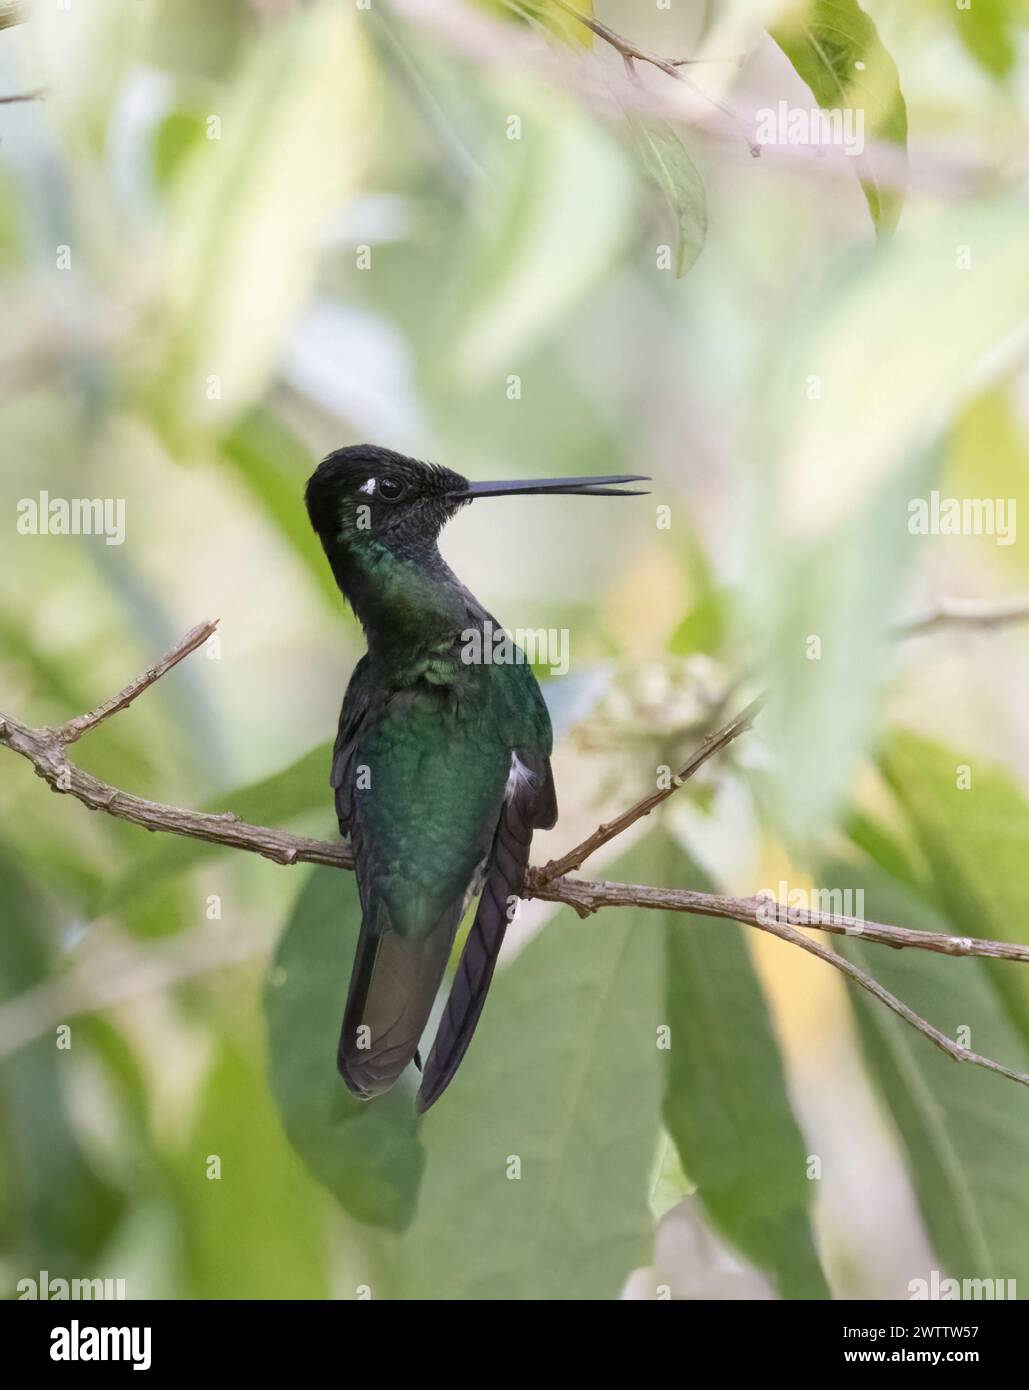 Talamanca Volcano Hummingbird closeup in a green leafy shrub Stock Photo